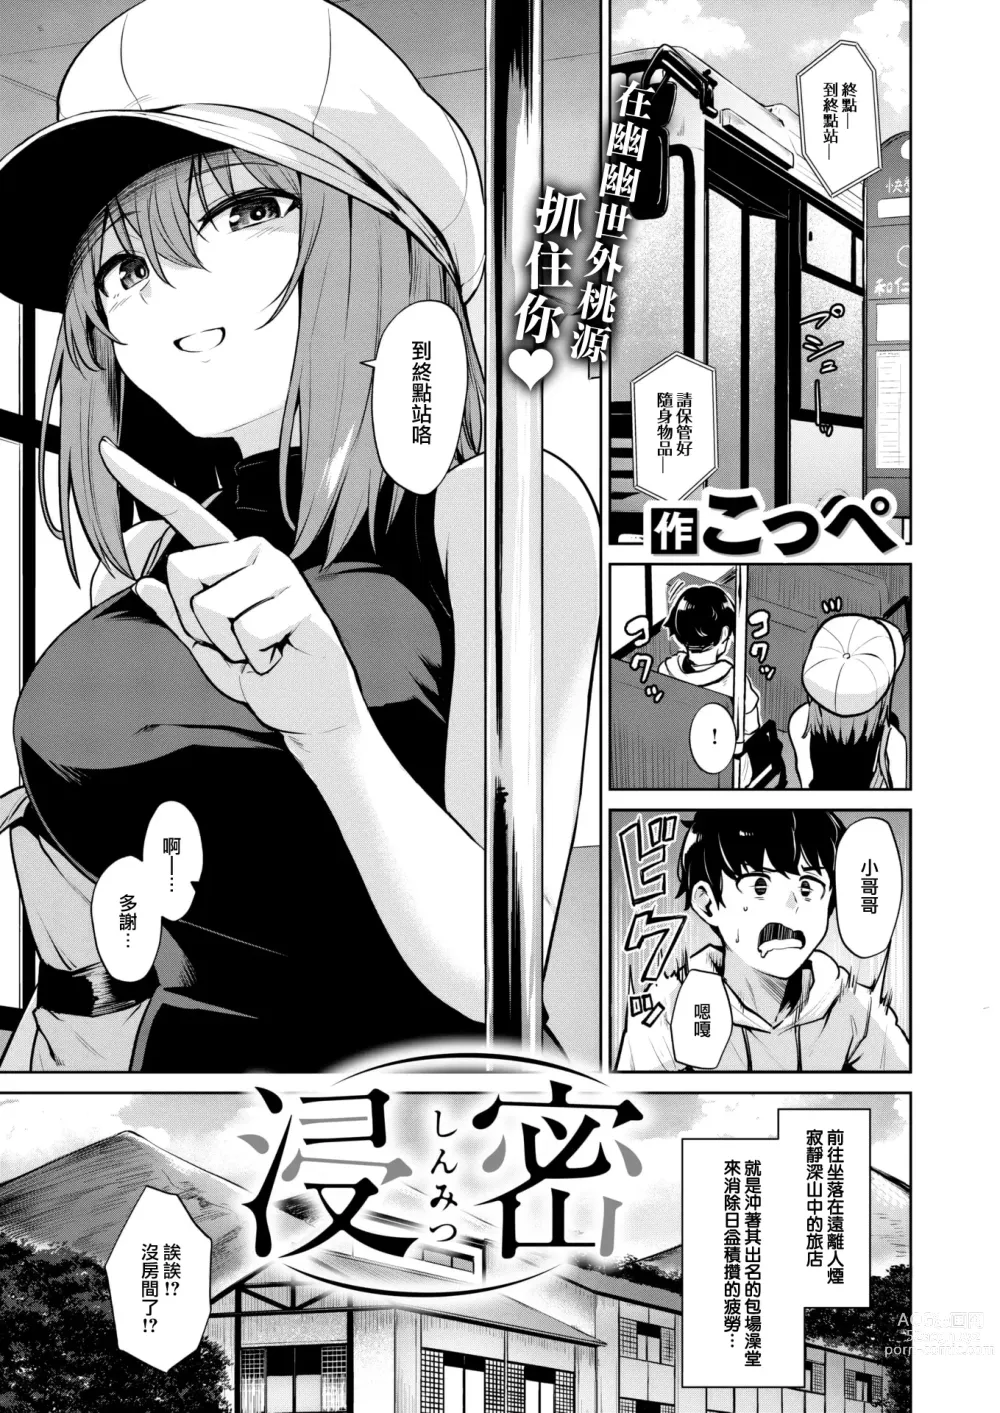 Page 2 of manga Shinnmitsu